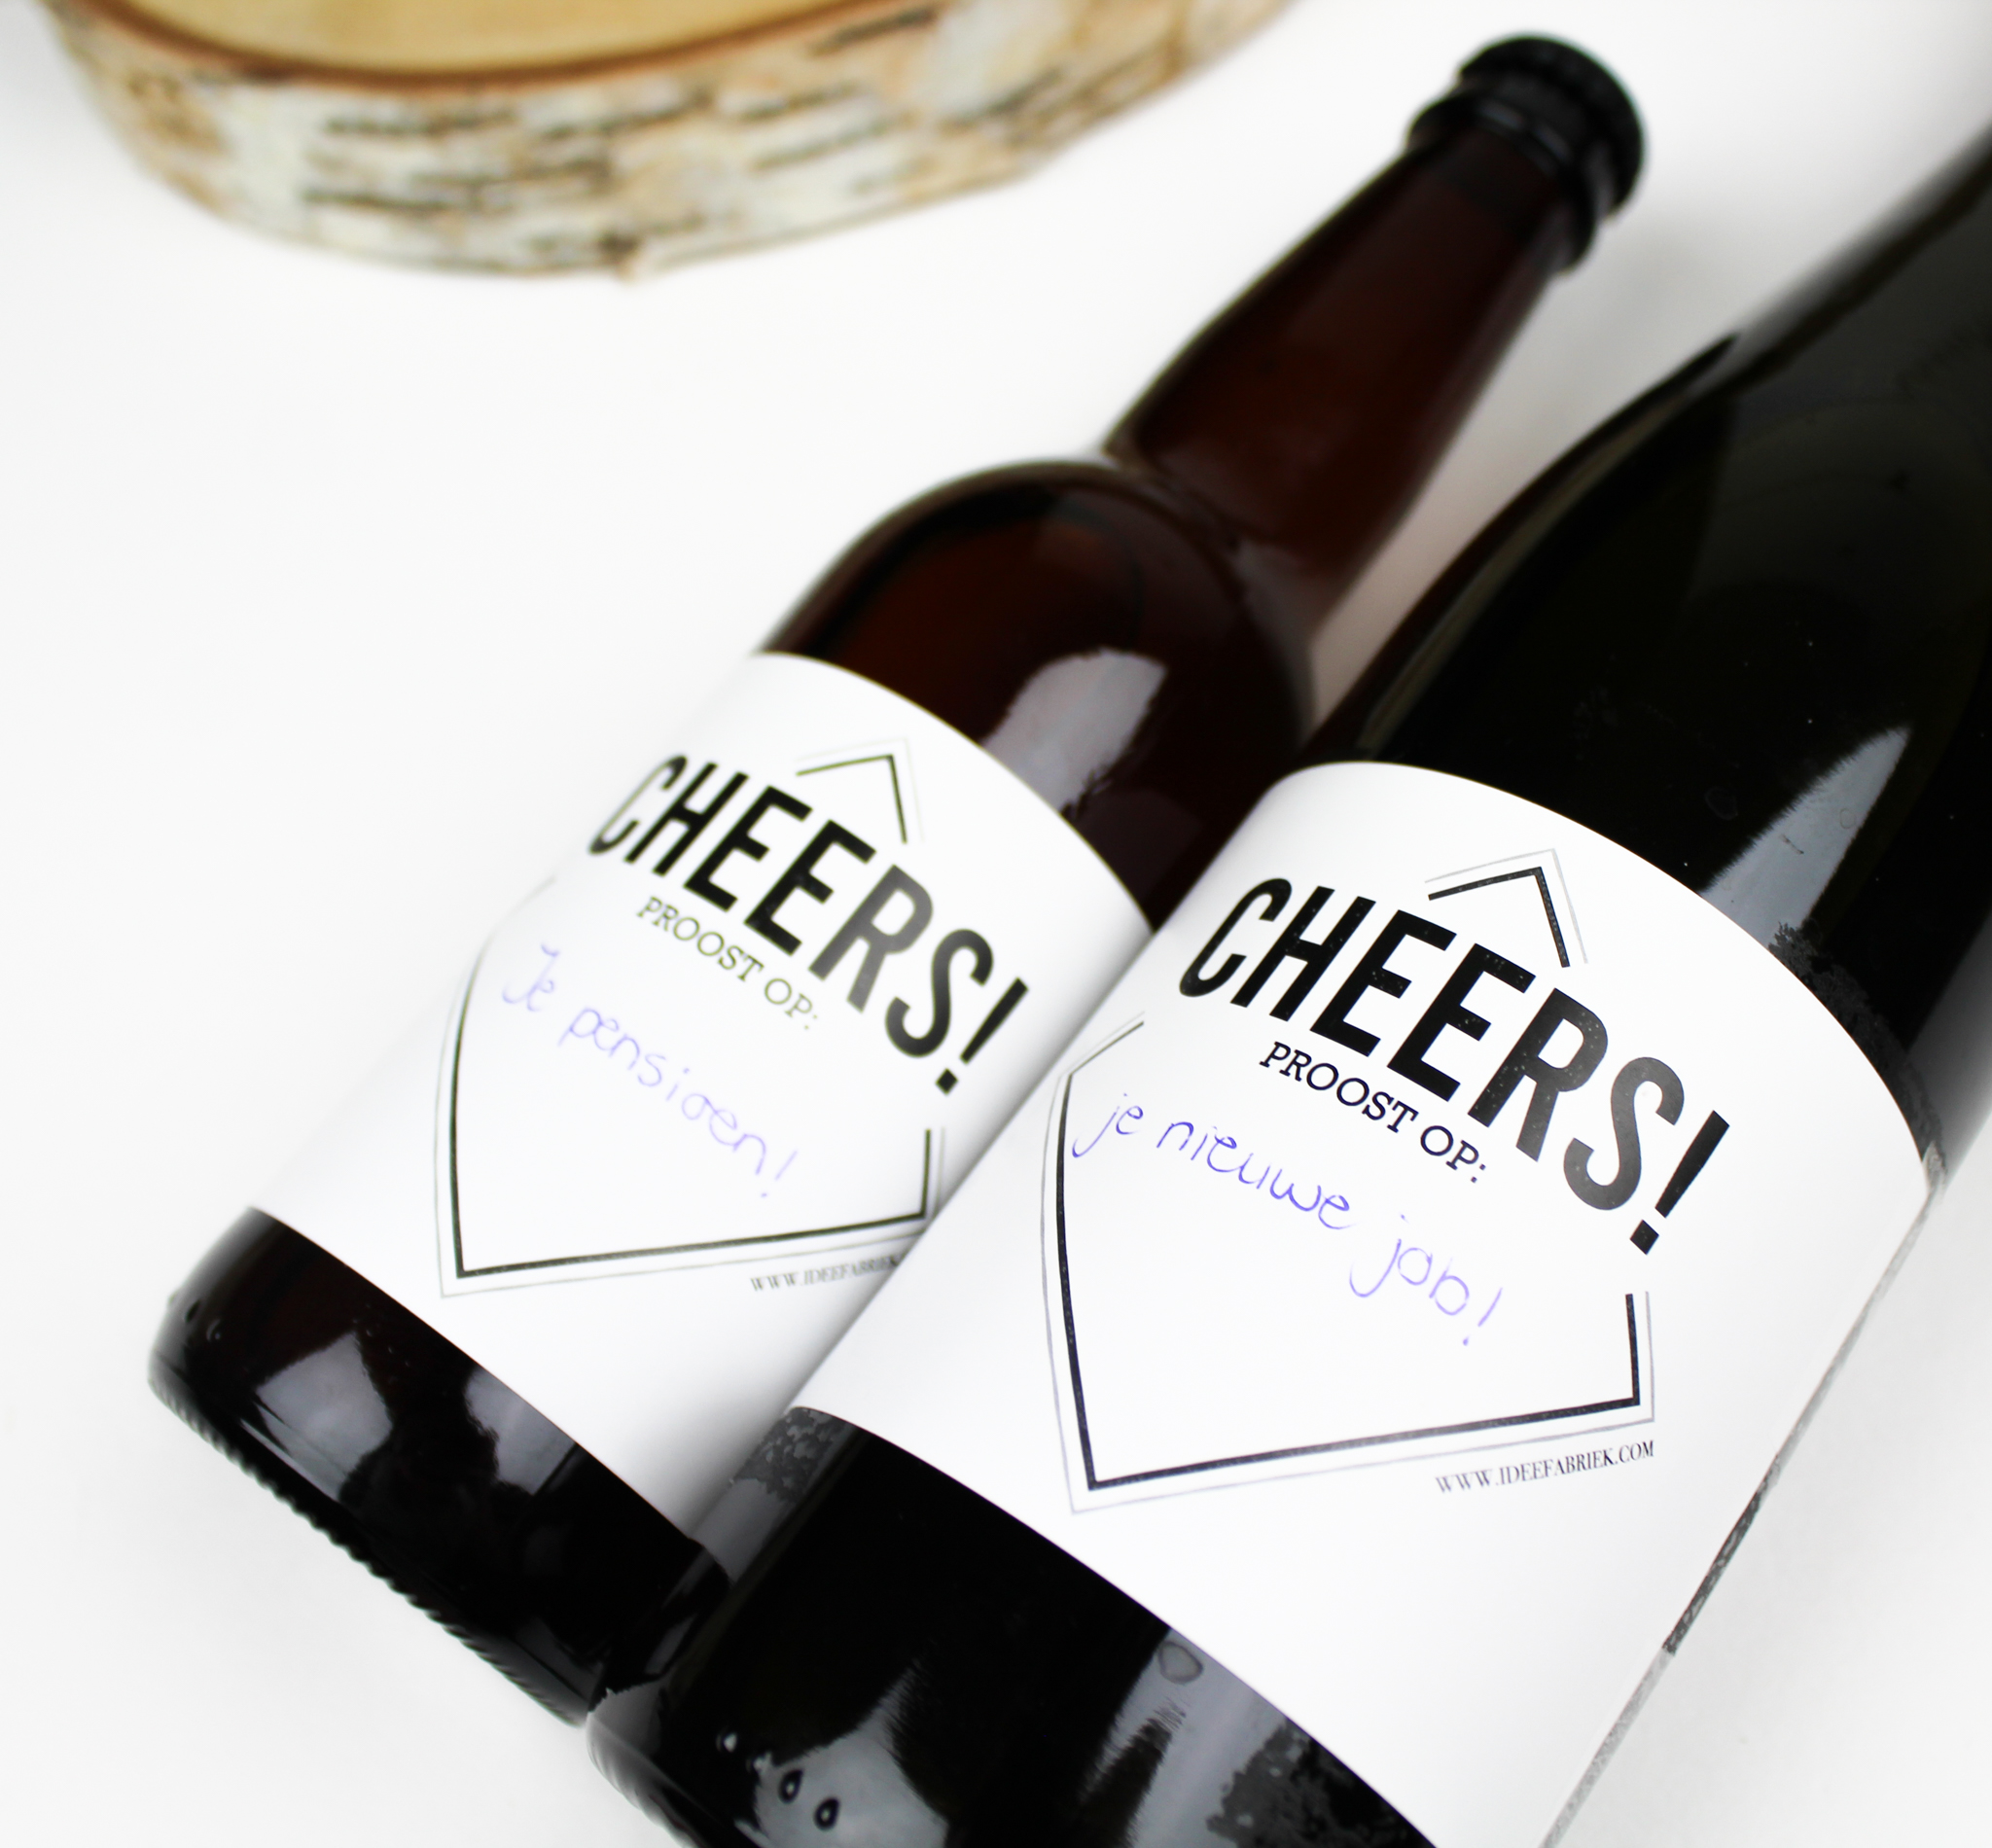 bierlabel wijnlabel etiket wijnetiket bieretiket ideefabriek proost op cadeau cadeautip